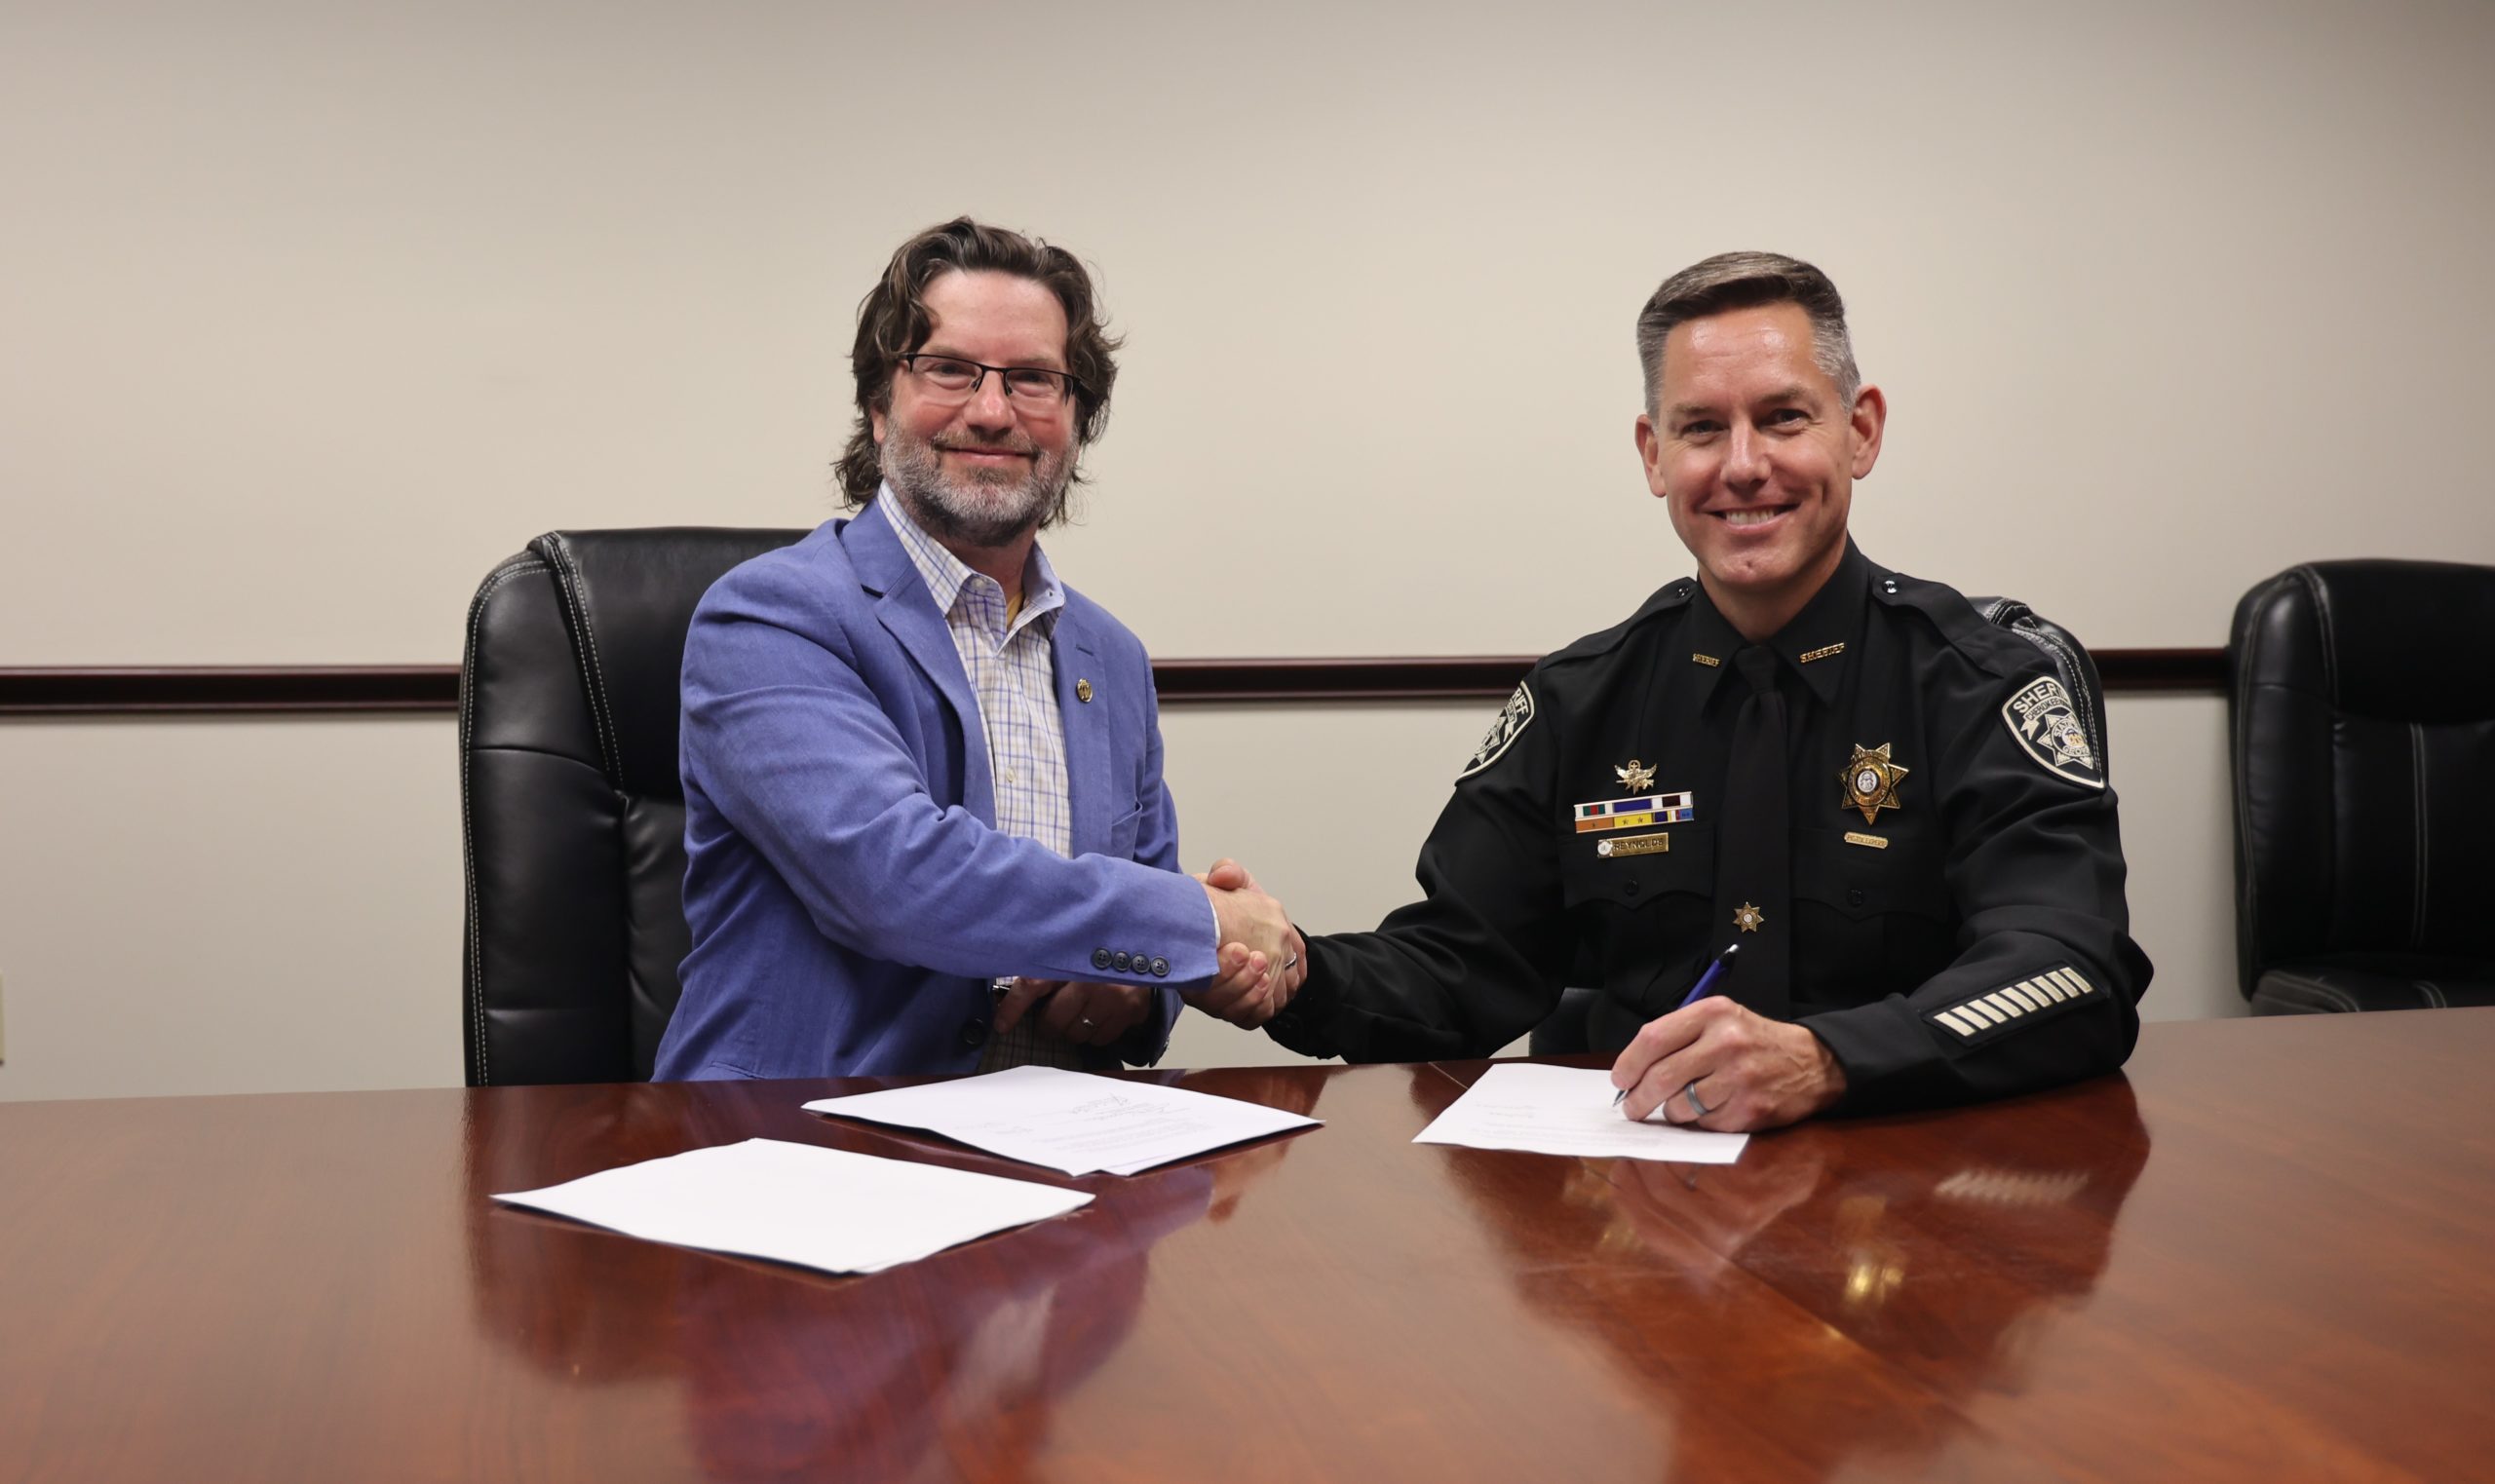 County Sheriff Partnership